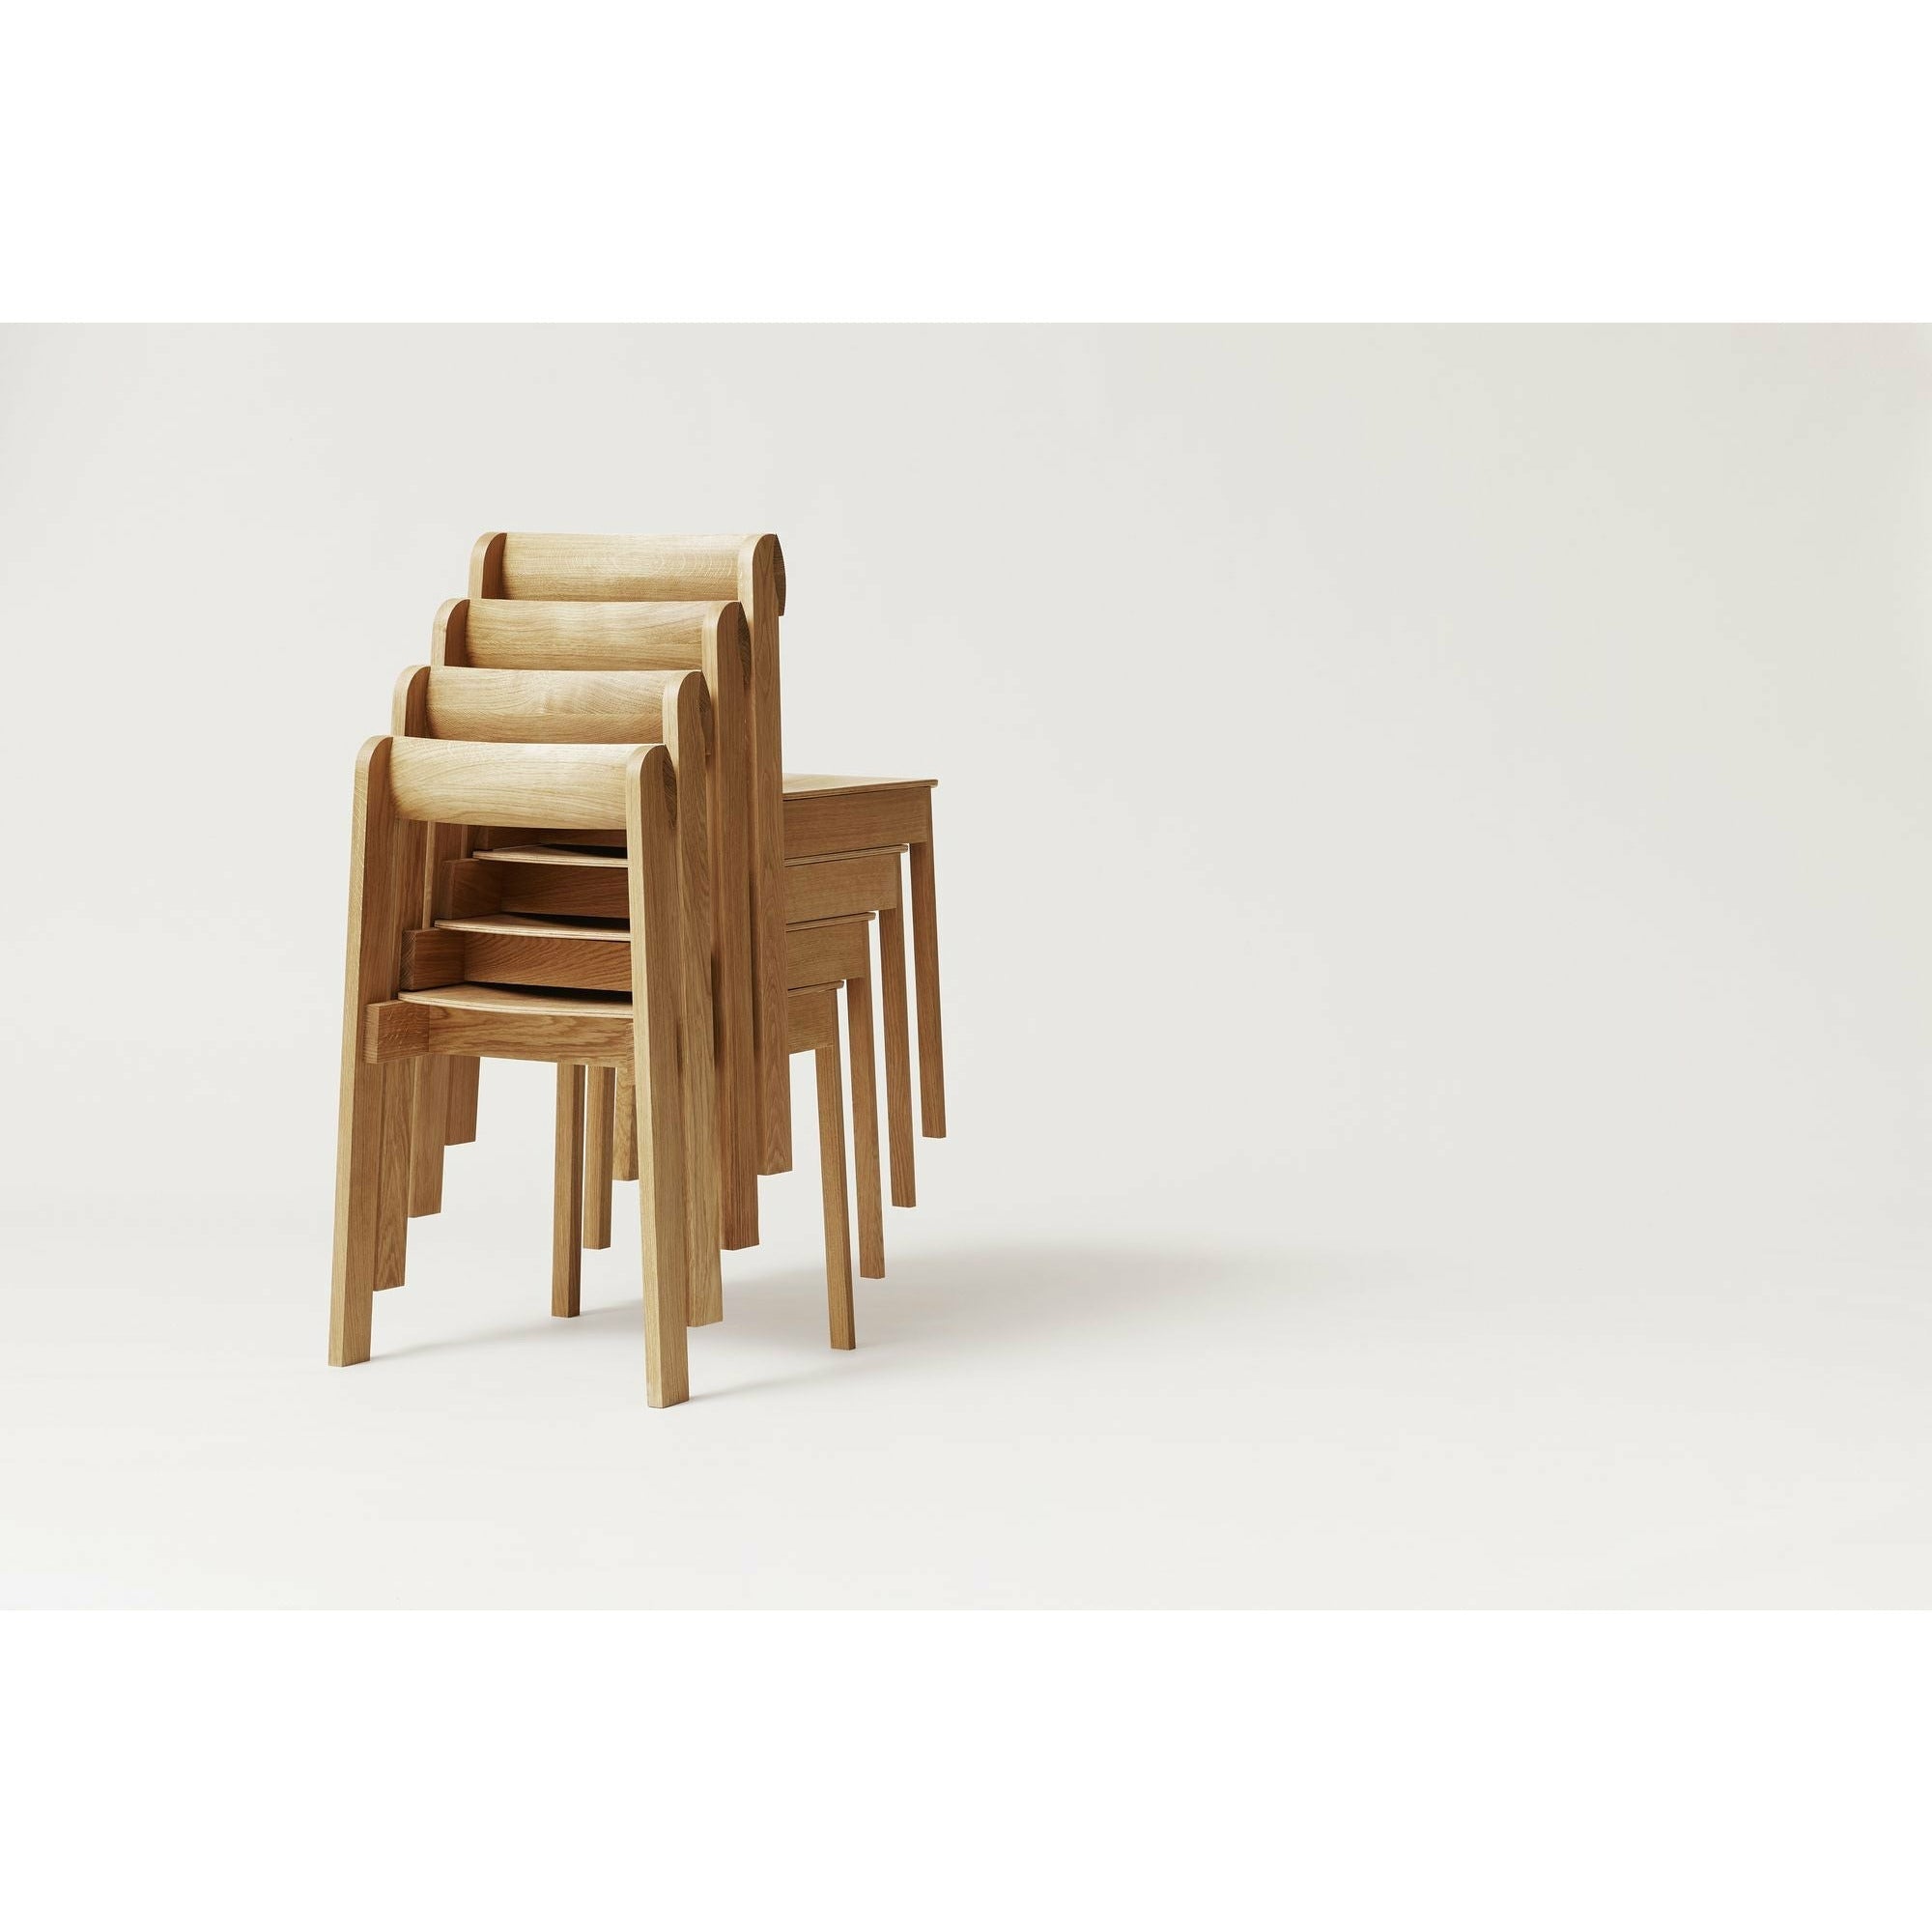 Form & Refine Blueprint-Stuhl. Eiche